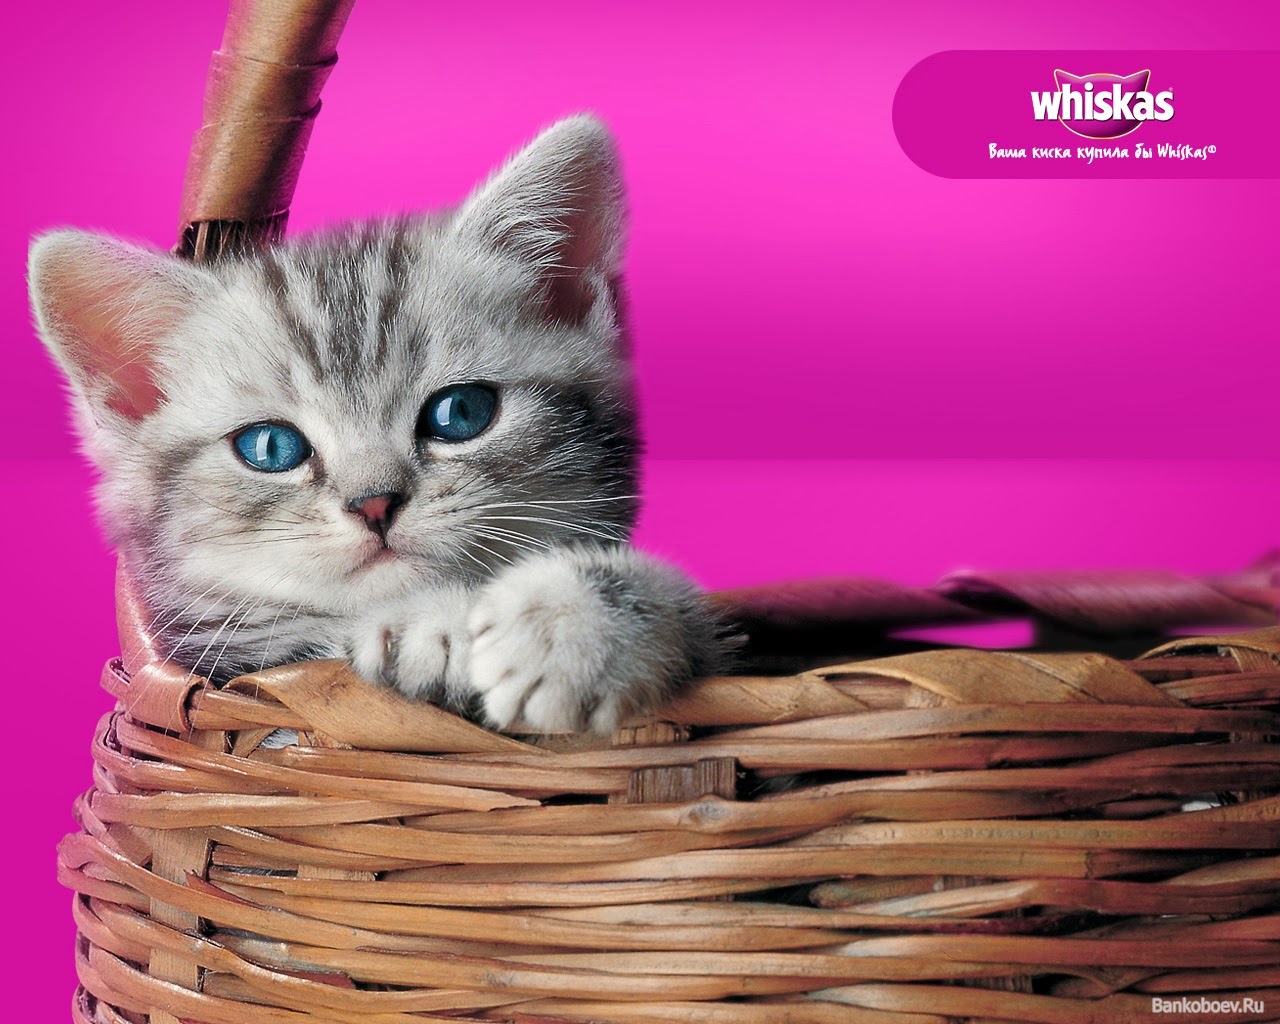 Review Makanan Kucing Whiskas Junior Kitten Radiokucingcom